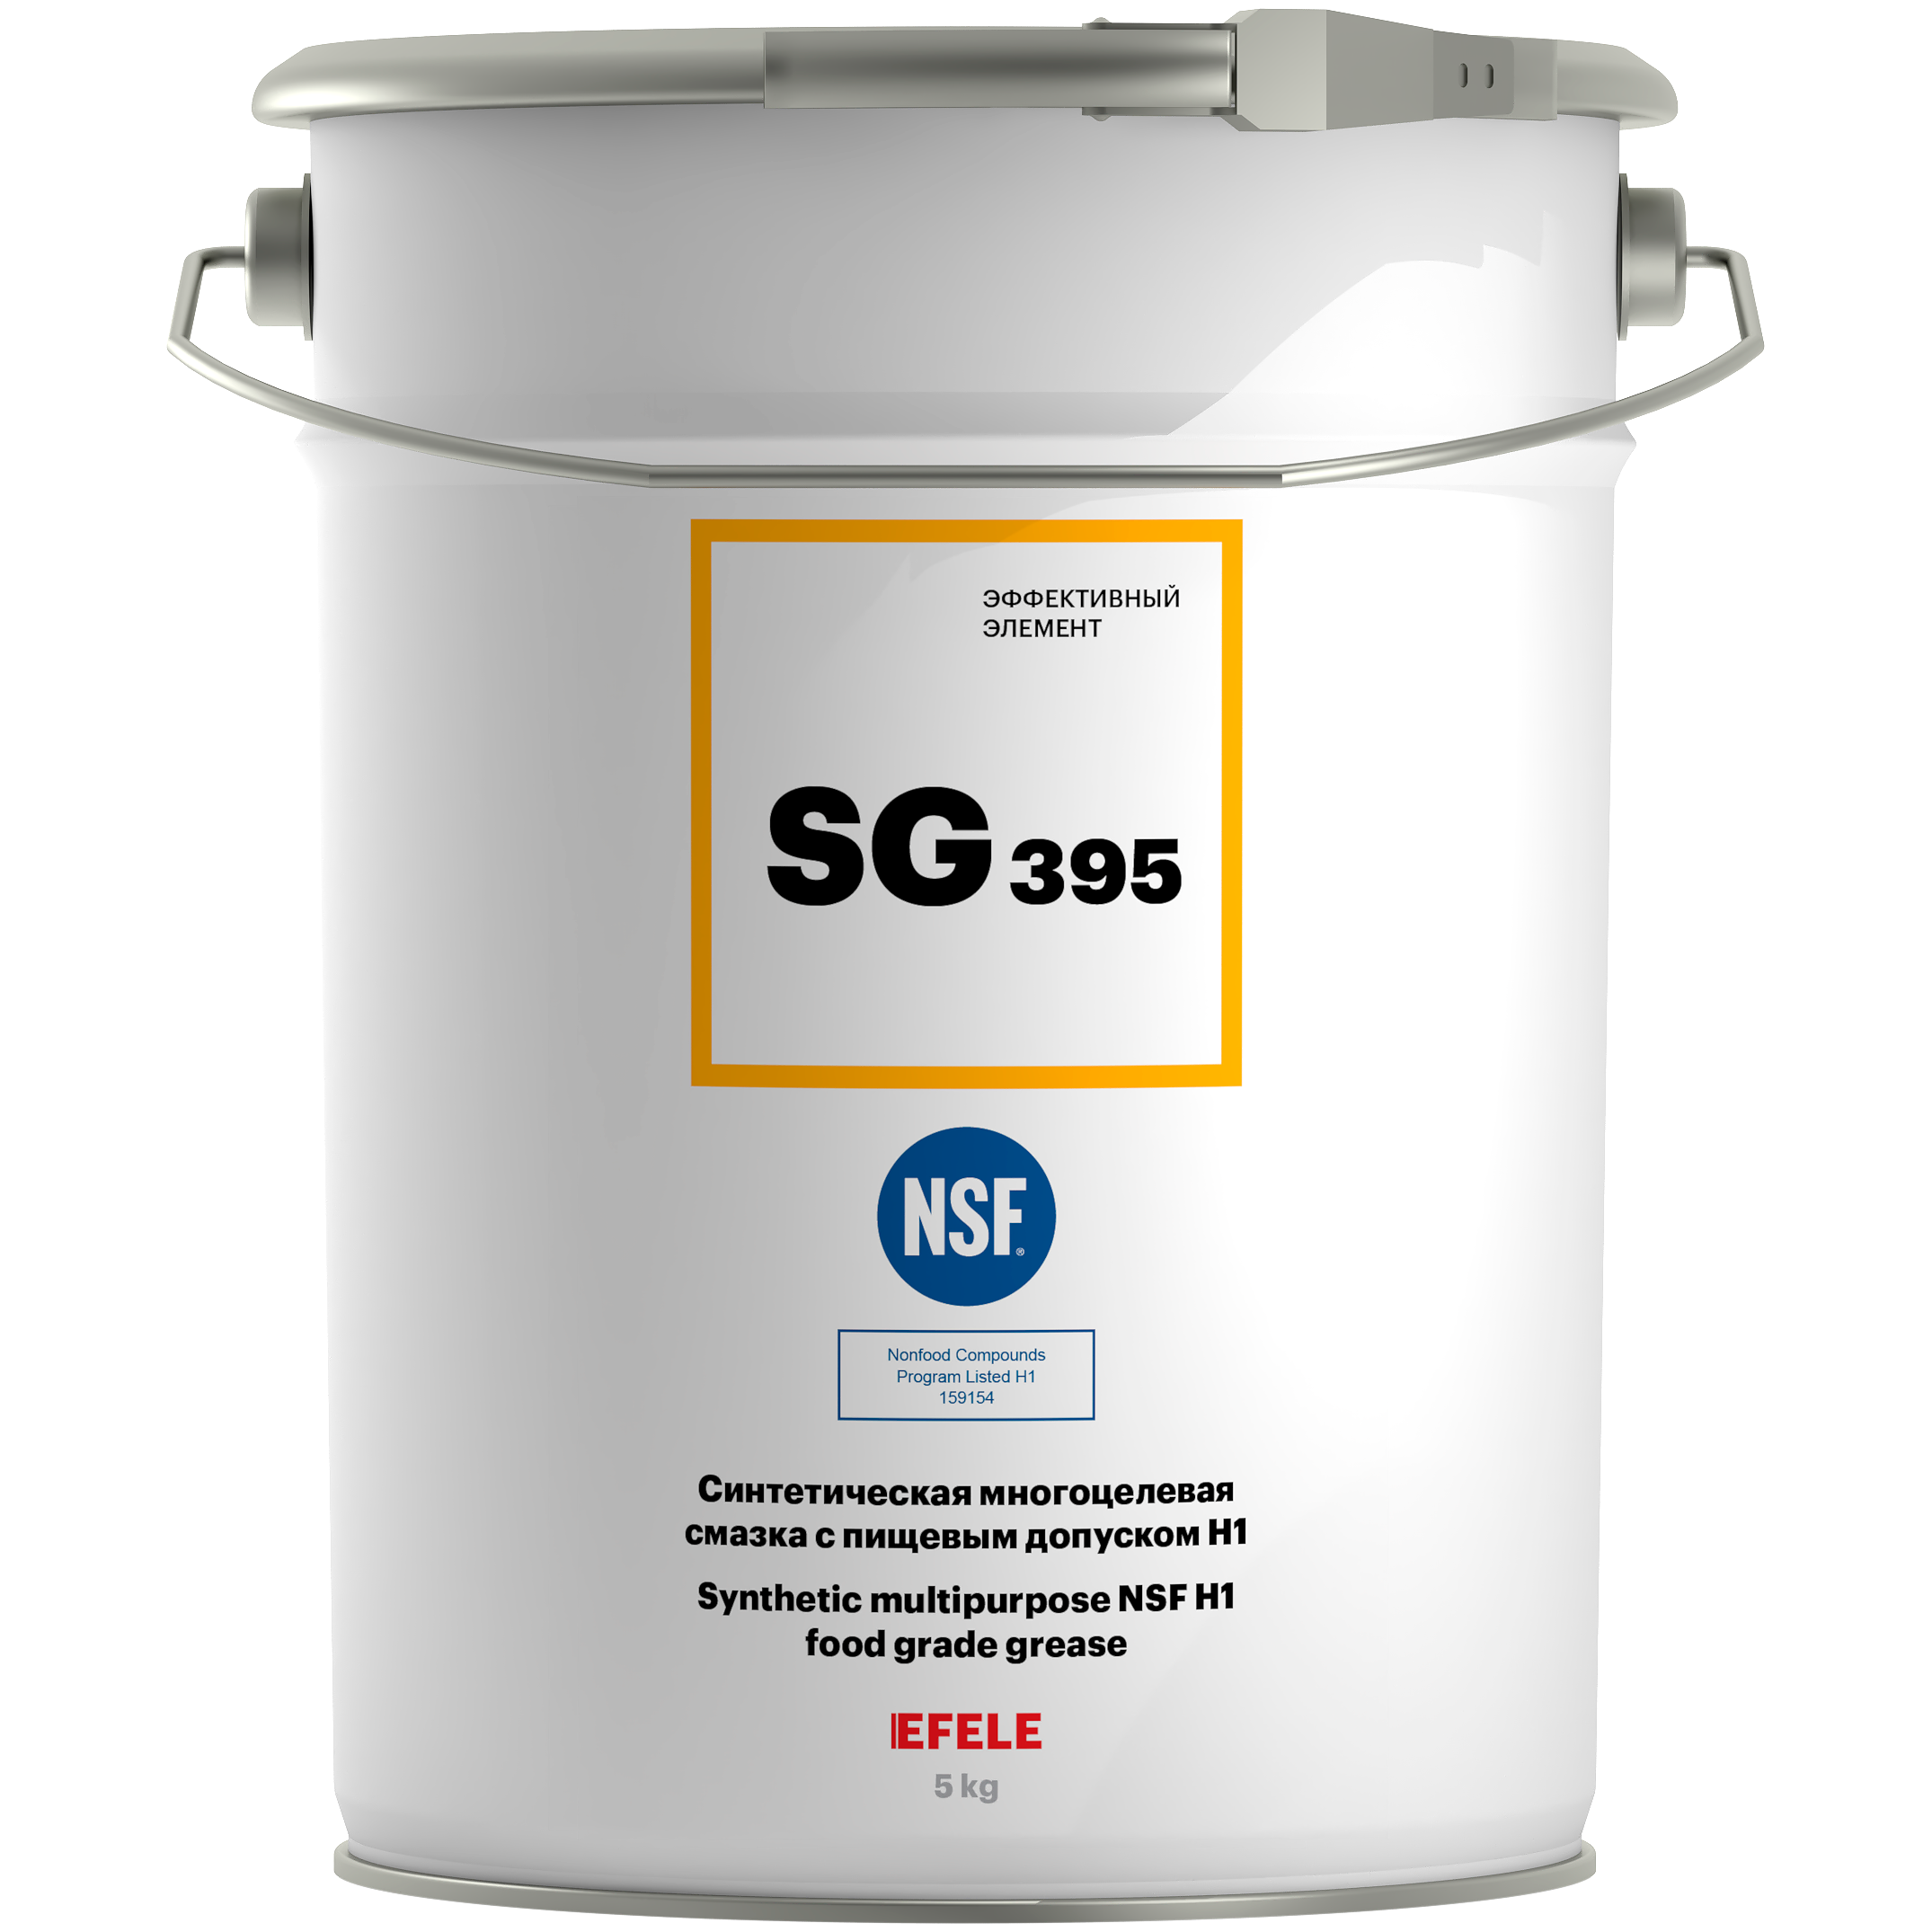 Многоцелевая смазка с пищевым допуском Н1 EFELE SG-395 (5 кг)